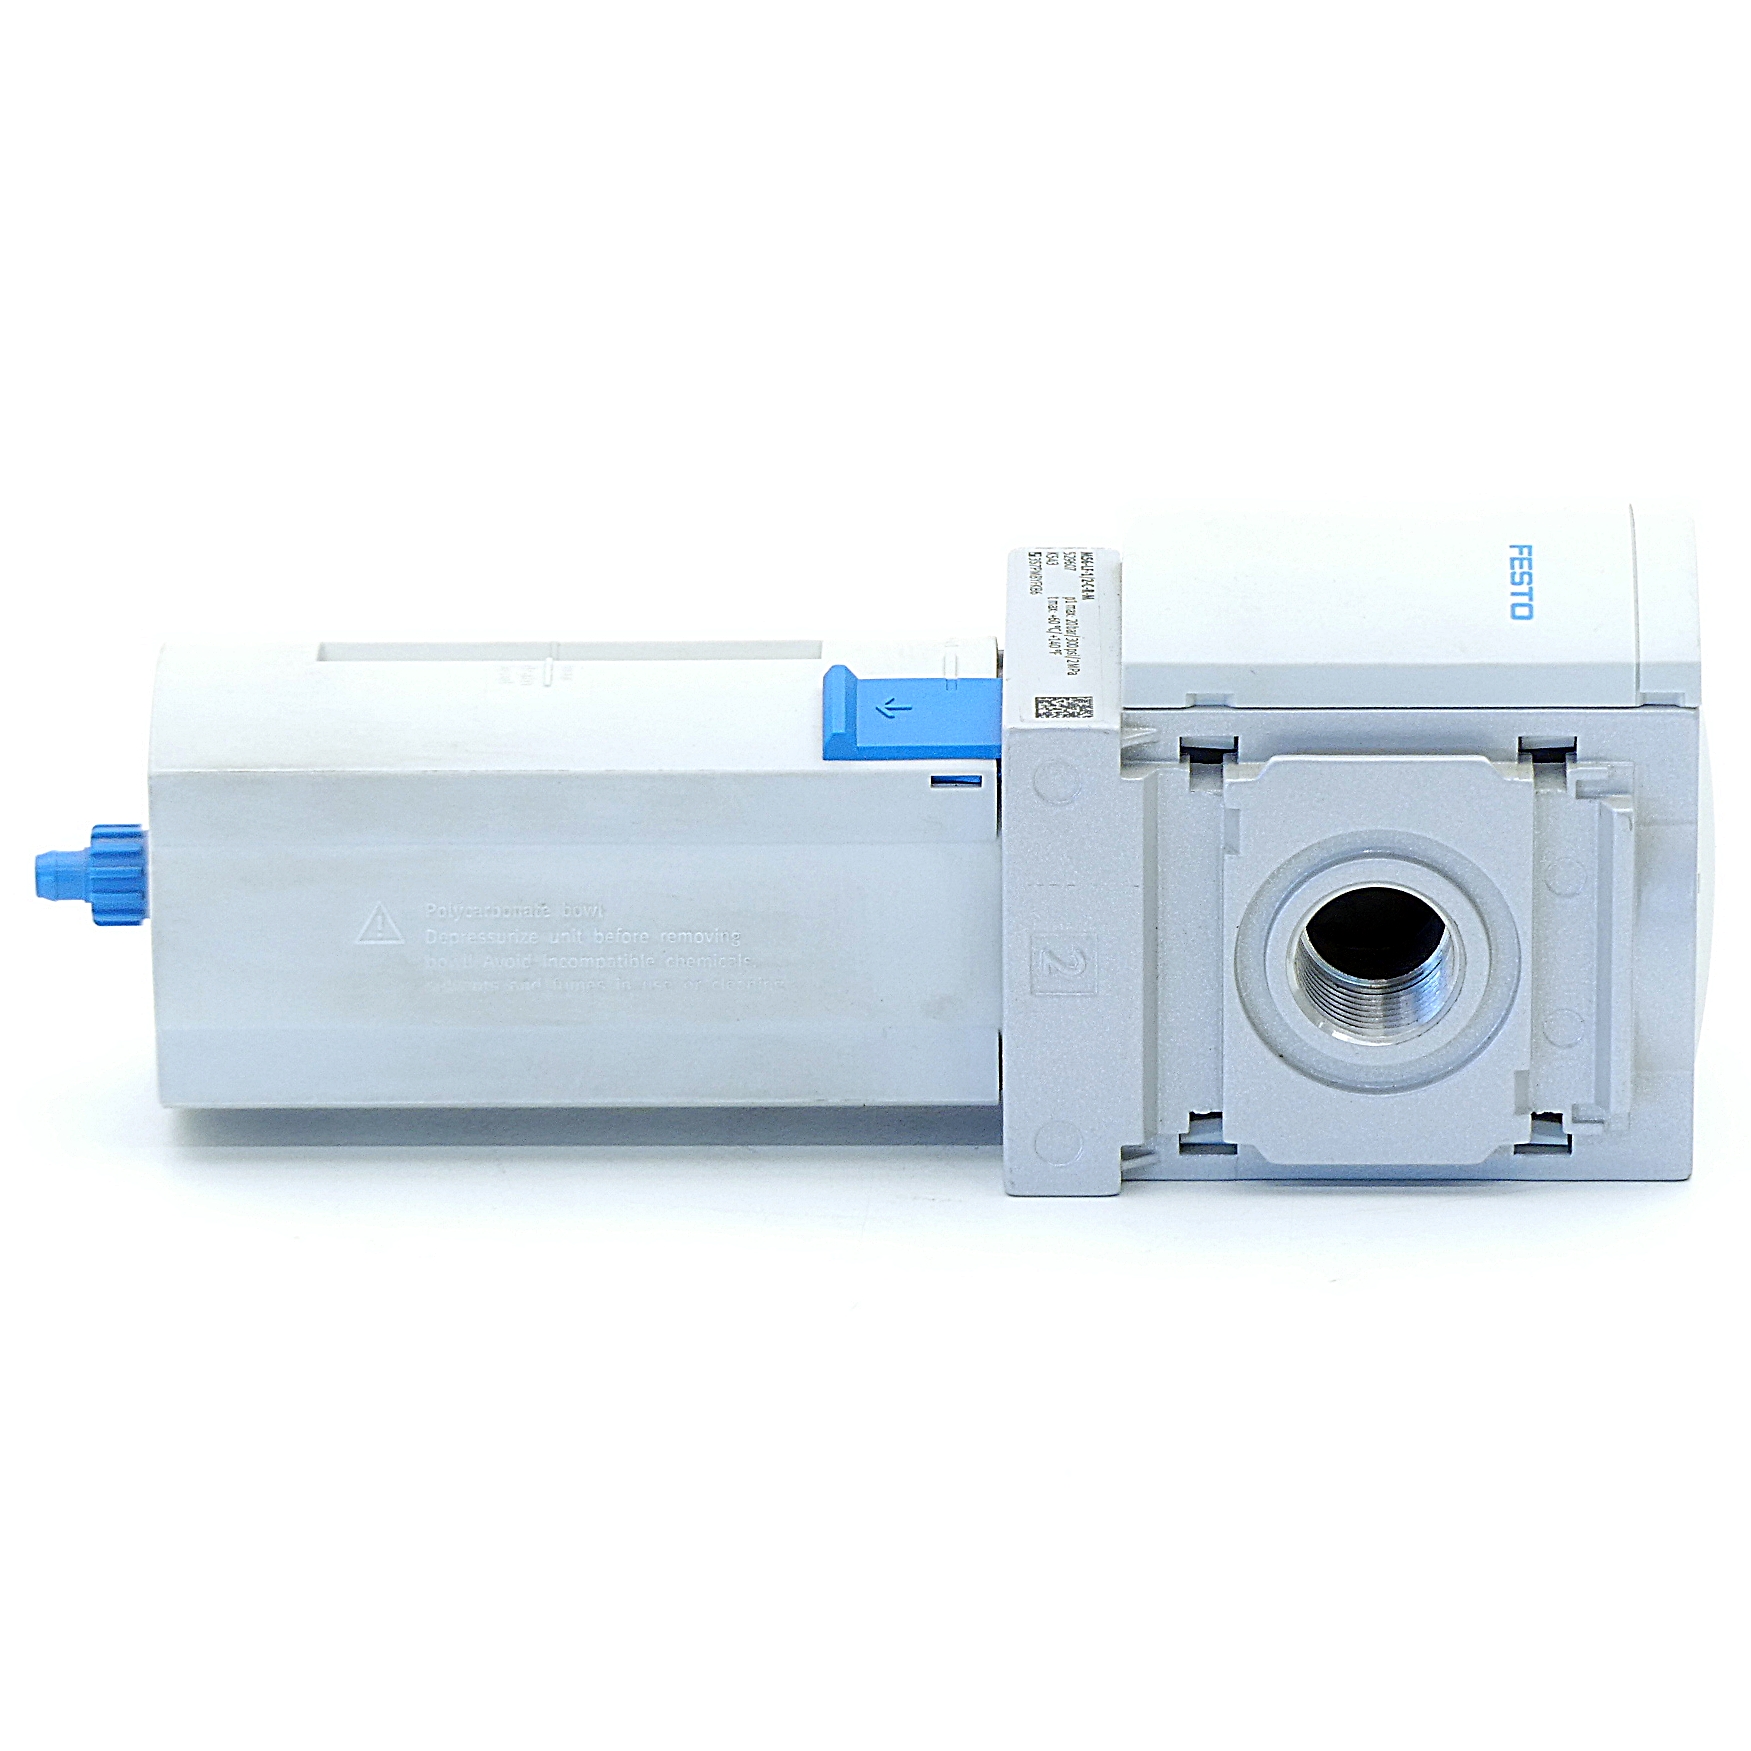 Filter regulator MS6-LF-1/2-C-R-M 